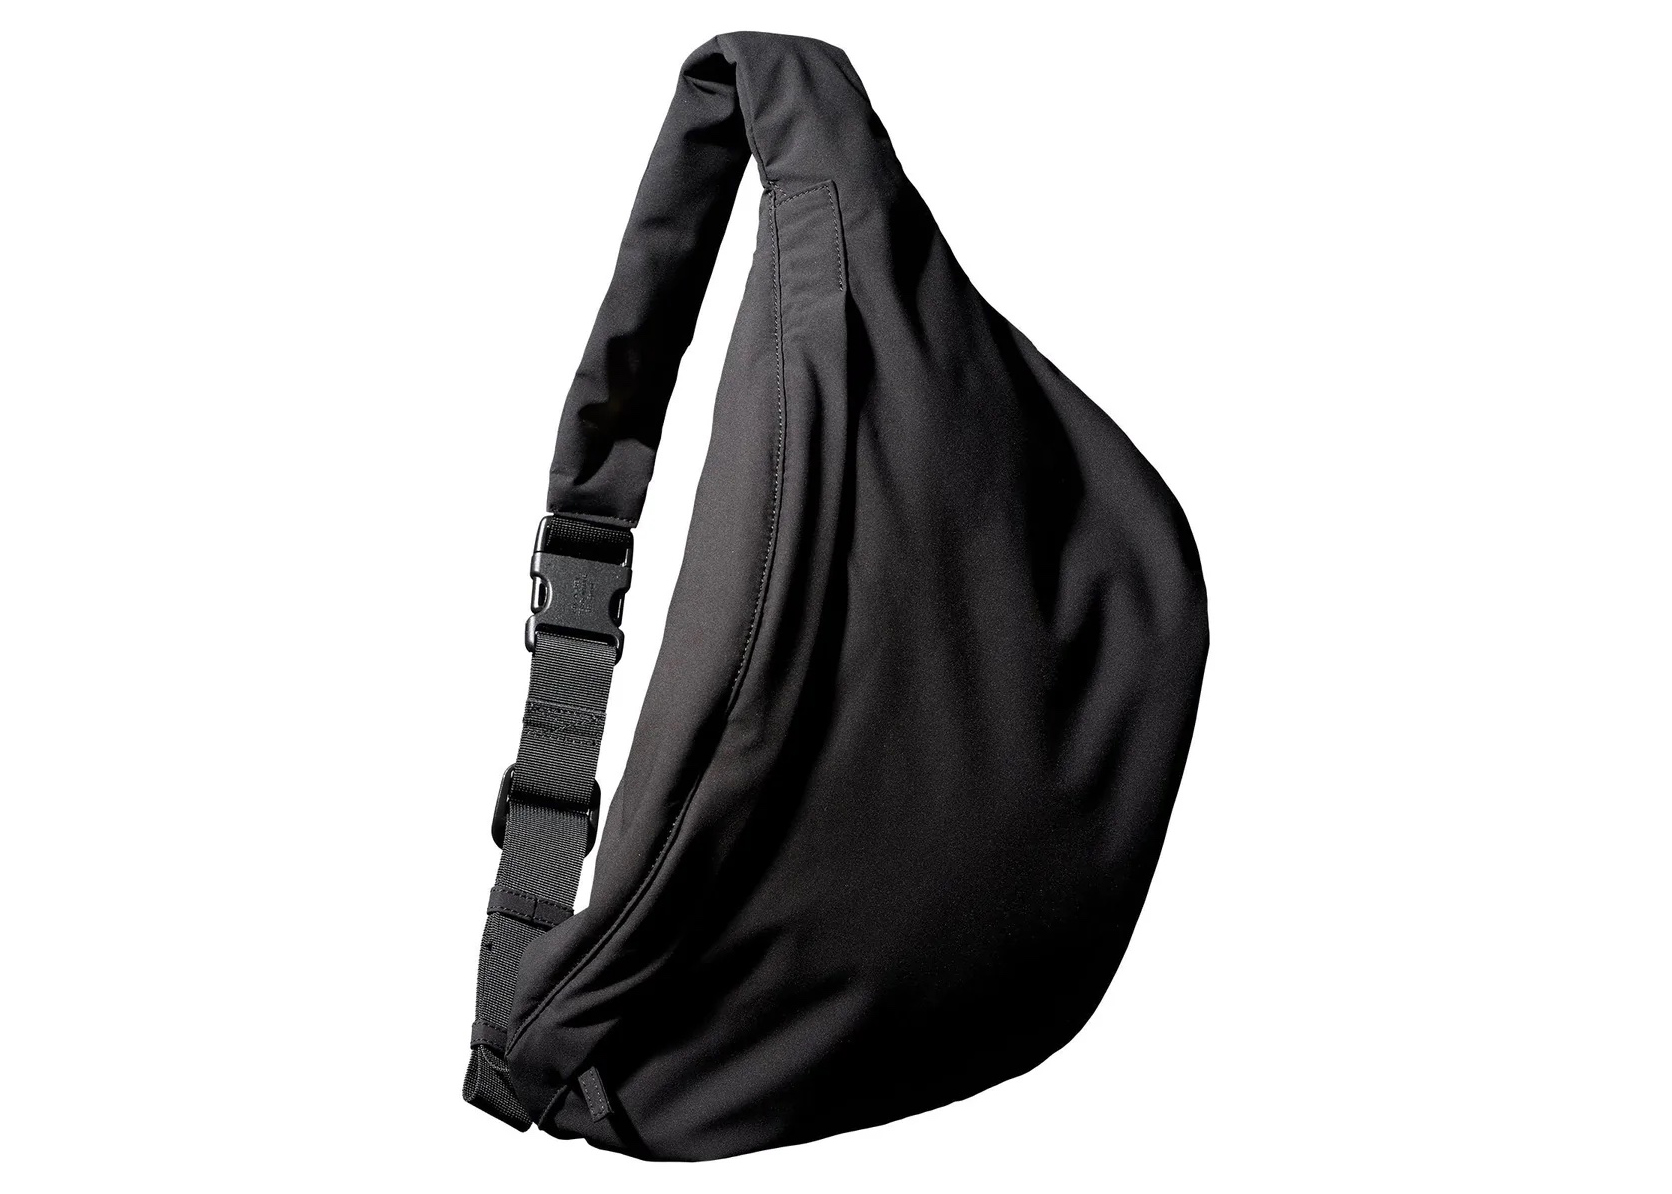 Yeezy Gap Crossbody Bag Black